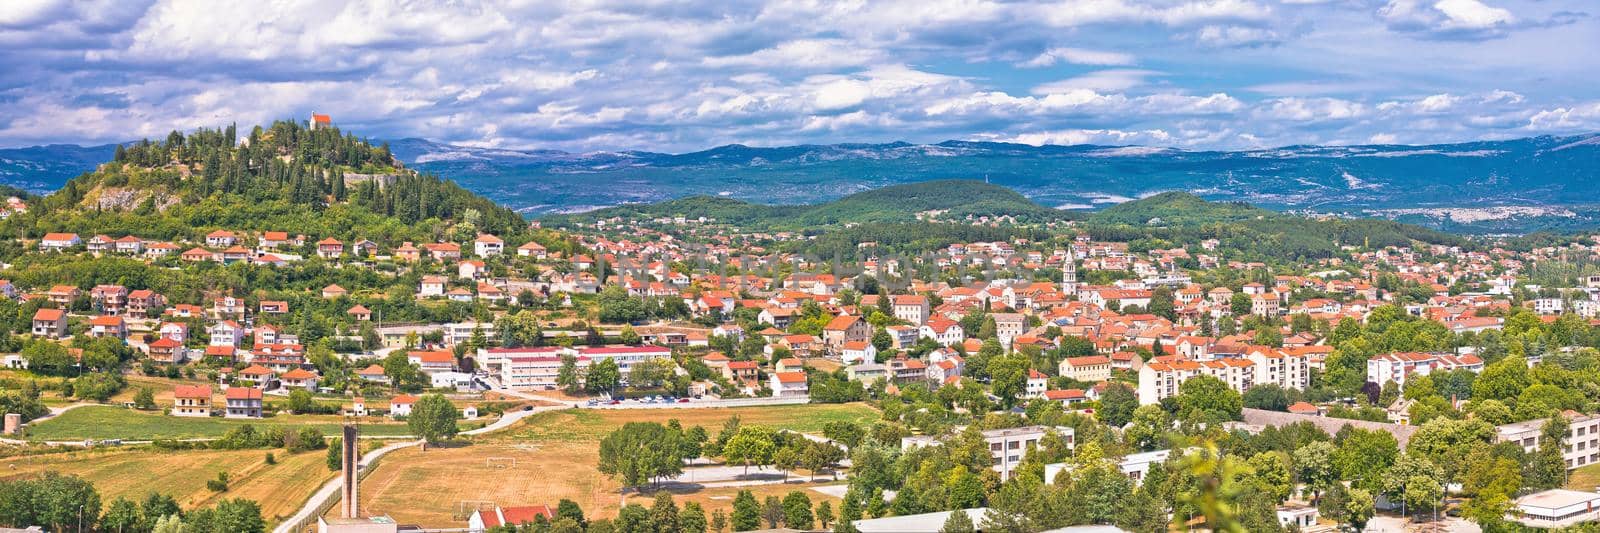 Sinj. Town of Sinj panoramic view, Dalmatia inland region of Croatia